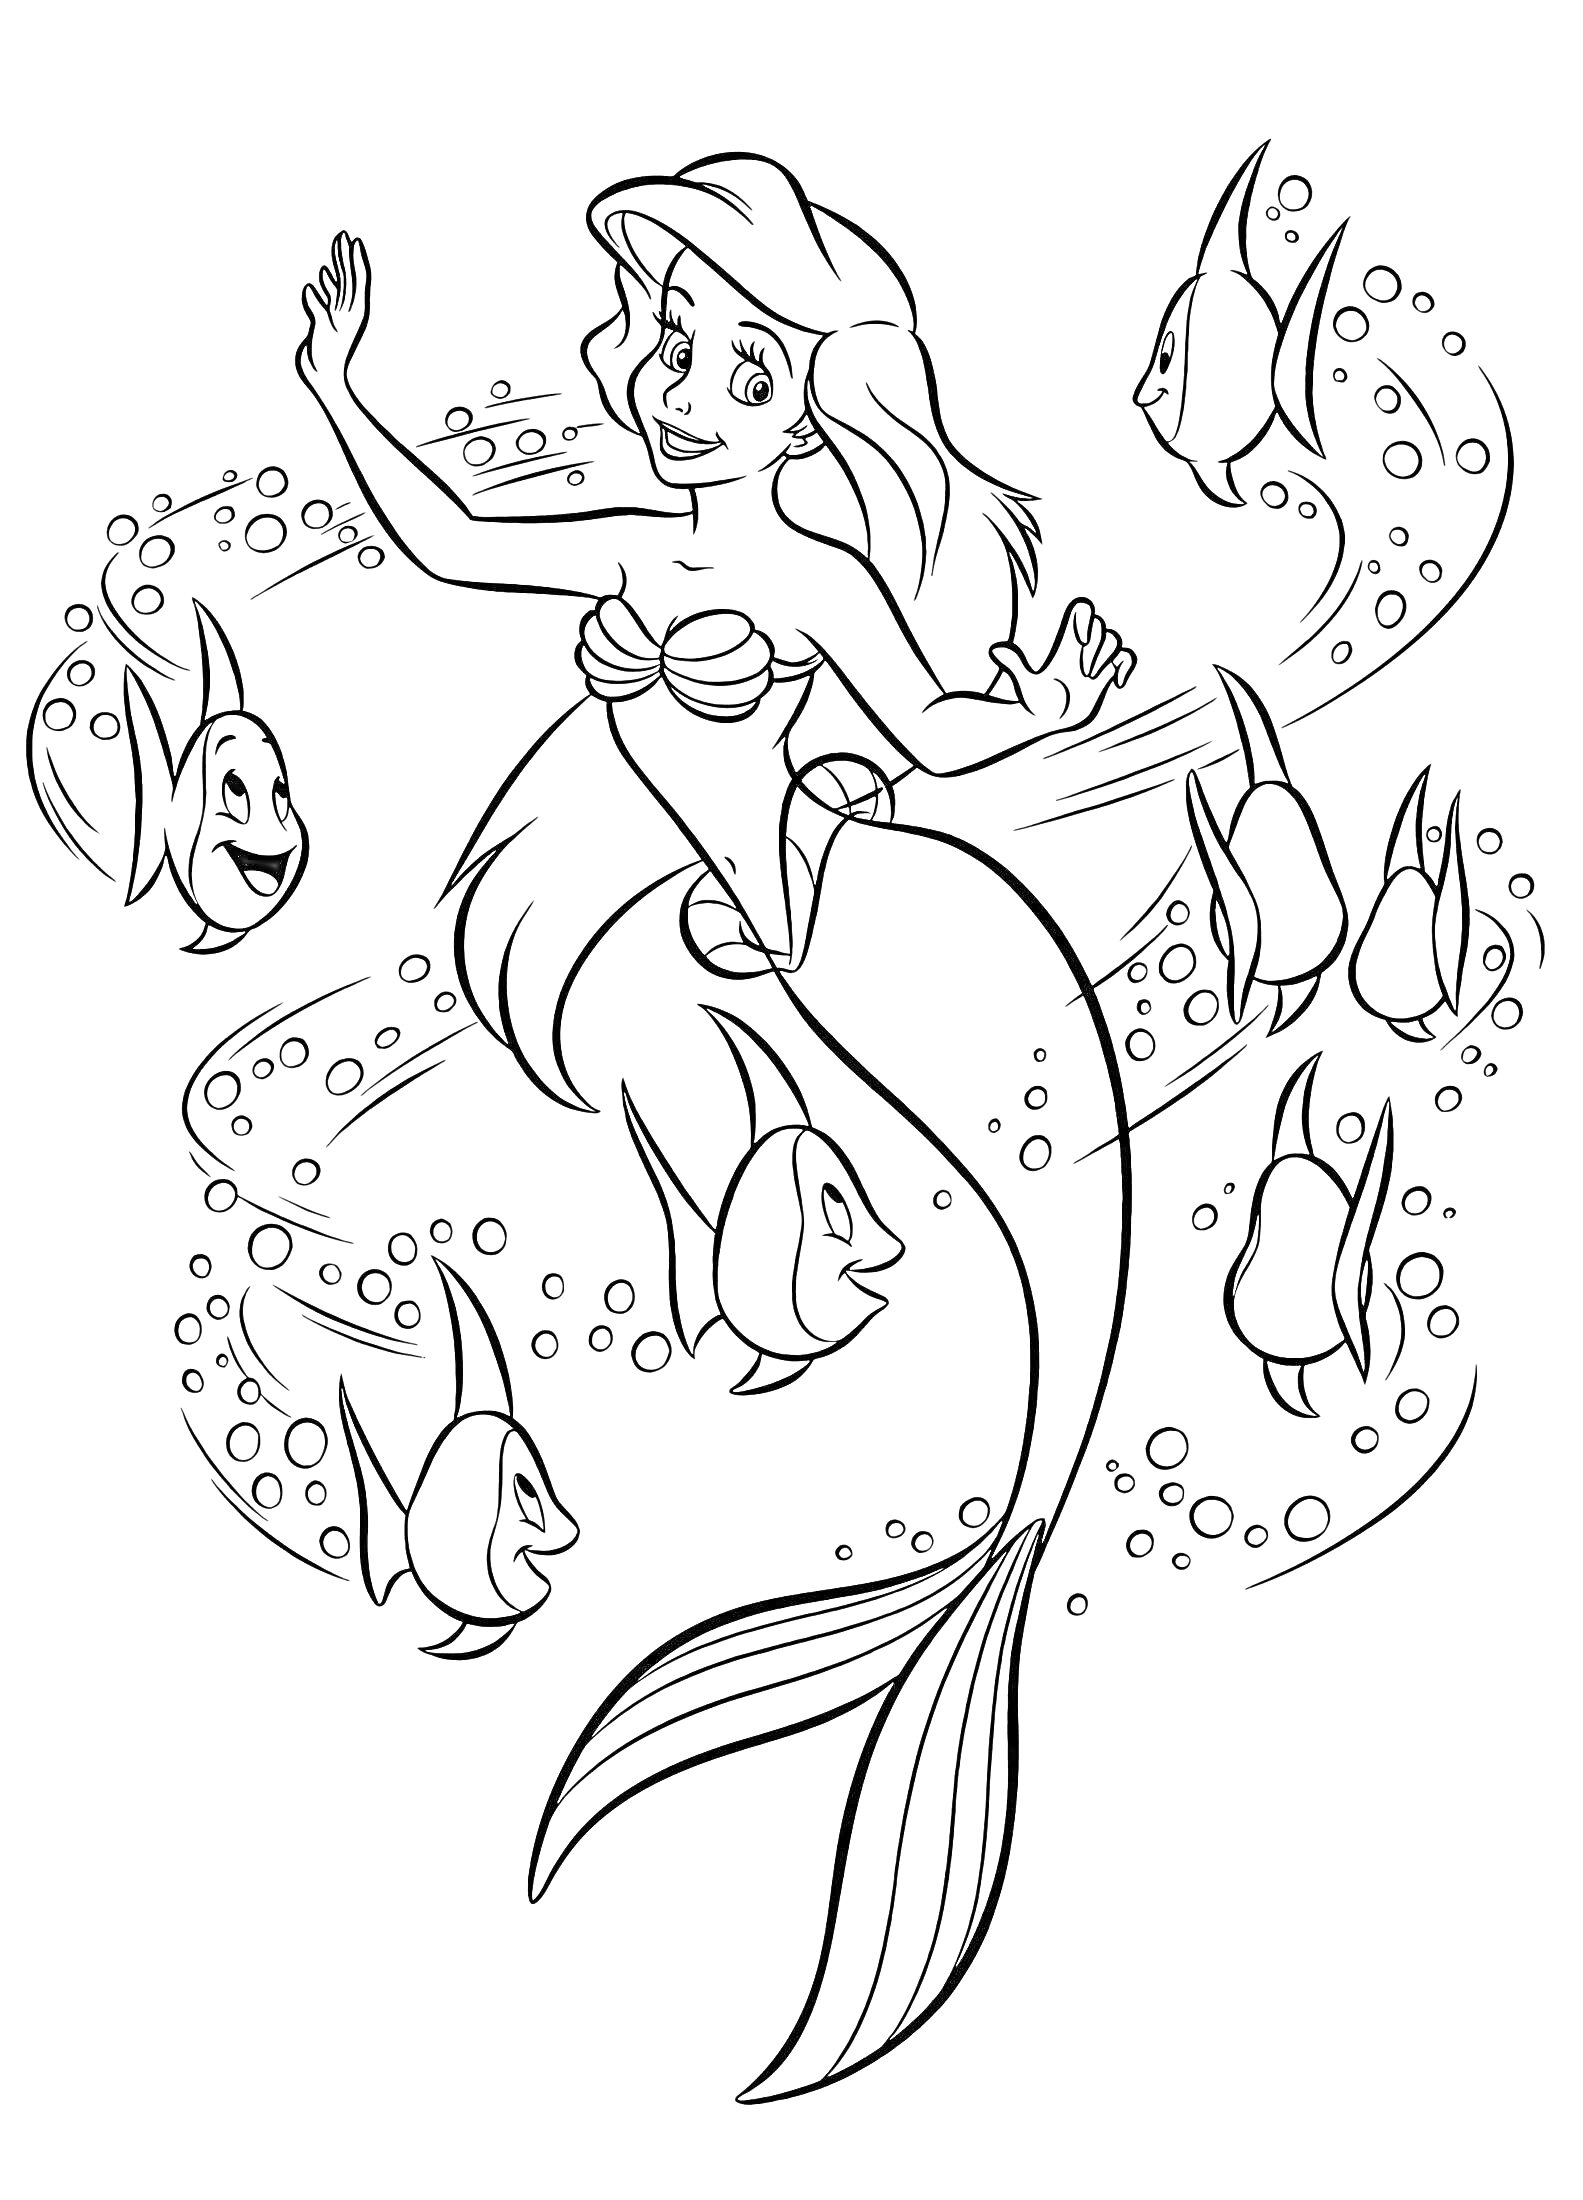 Раскраска Русалочка Ариэль с пятью рыбками, пузыри